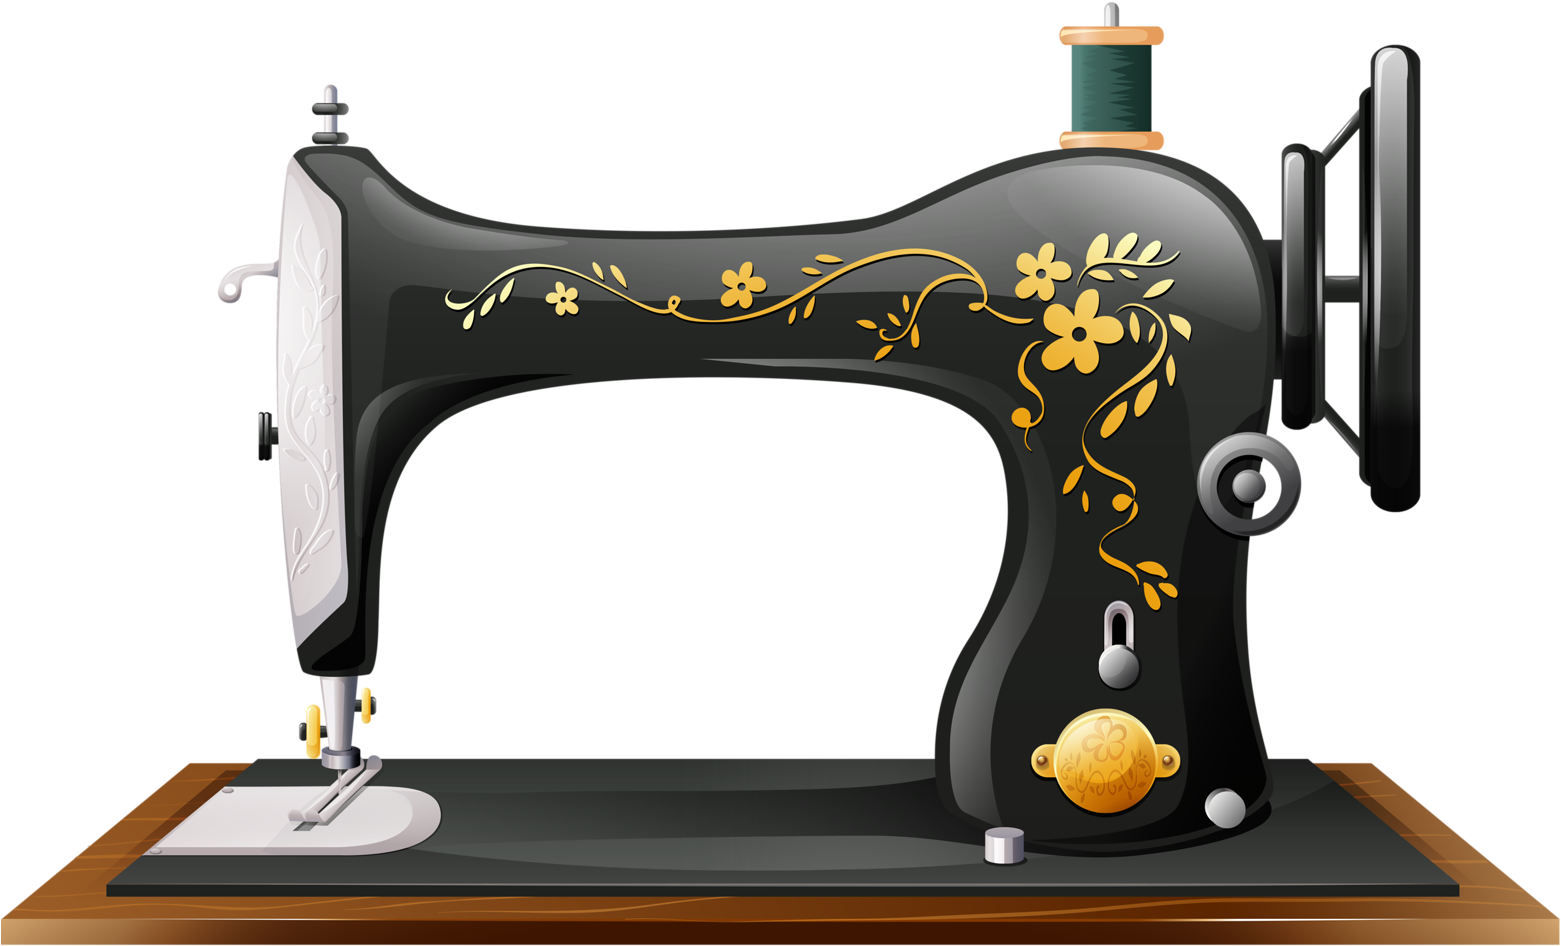 Sewing Machine PNG HD Image